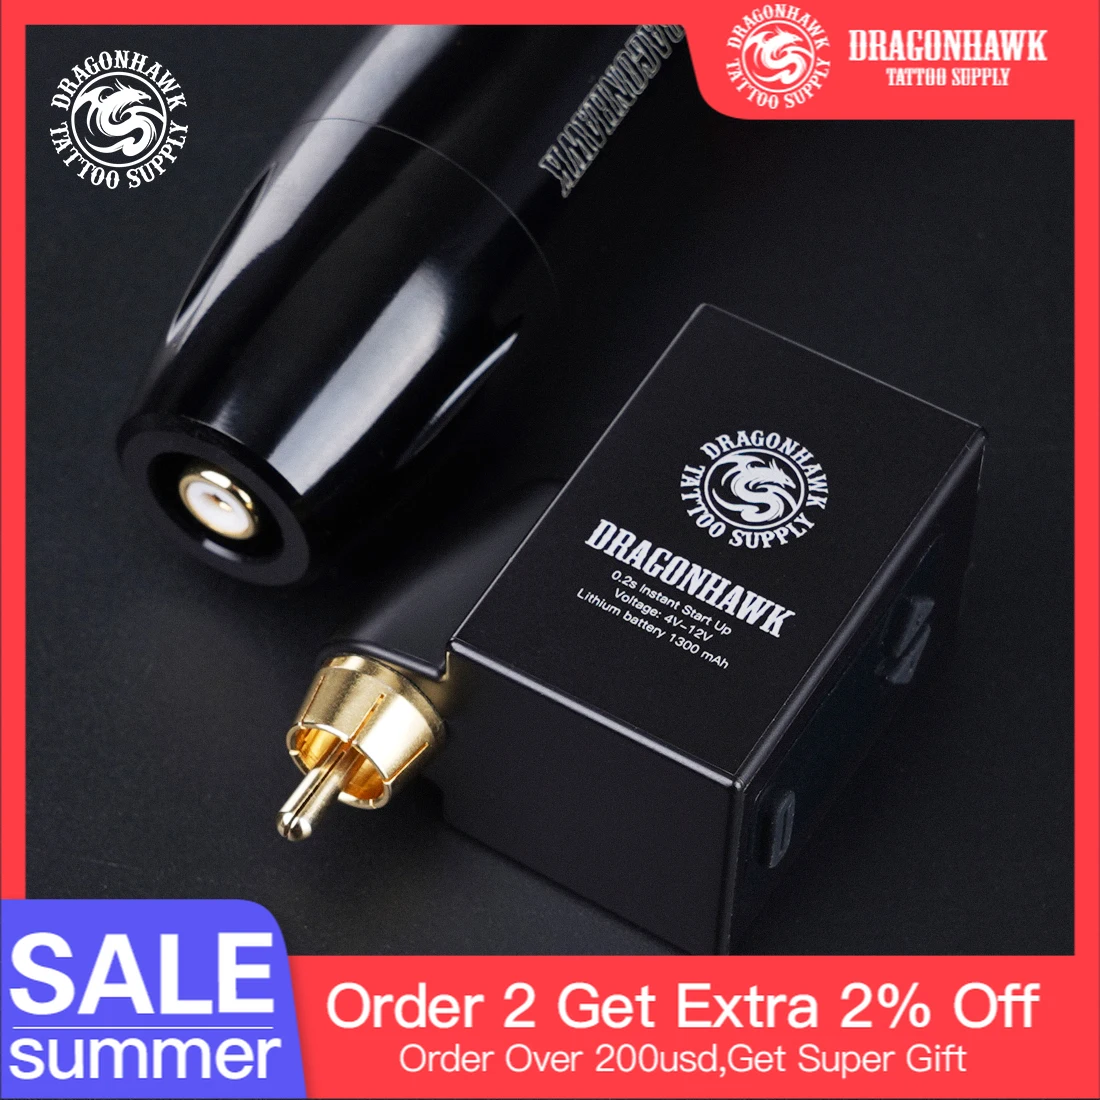 

Dragonhawk New LCD Mini Wireless Battery Power for Tattoo Pen Machine RCA Cord Permanent Makeup Power Supply Supplies